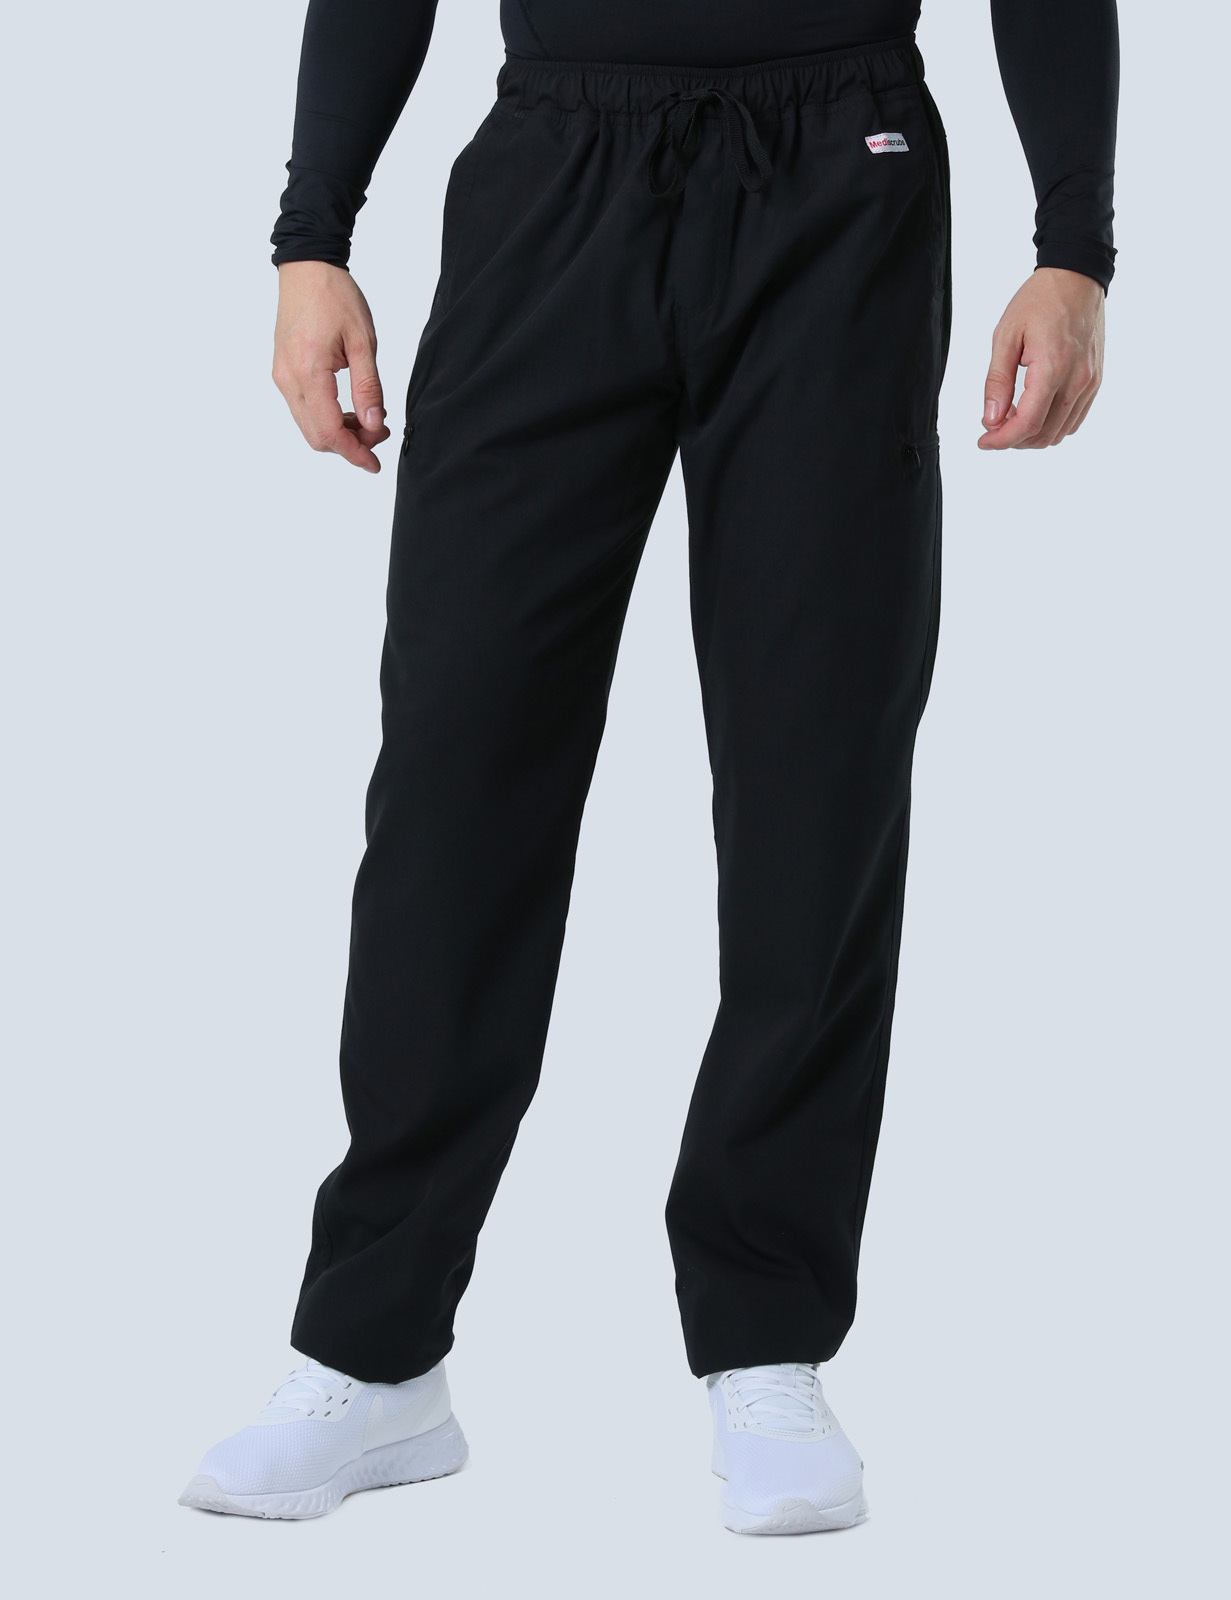 Men's Utility Pants - Black - 3X Large